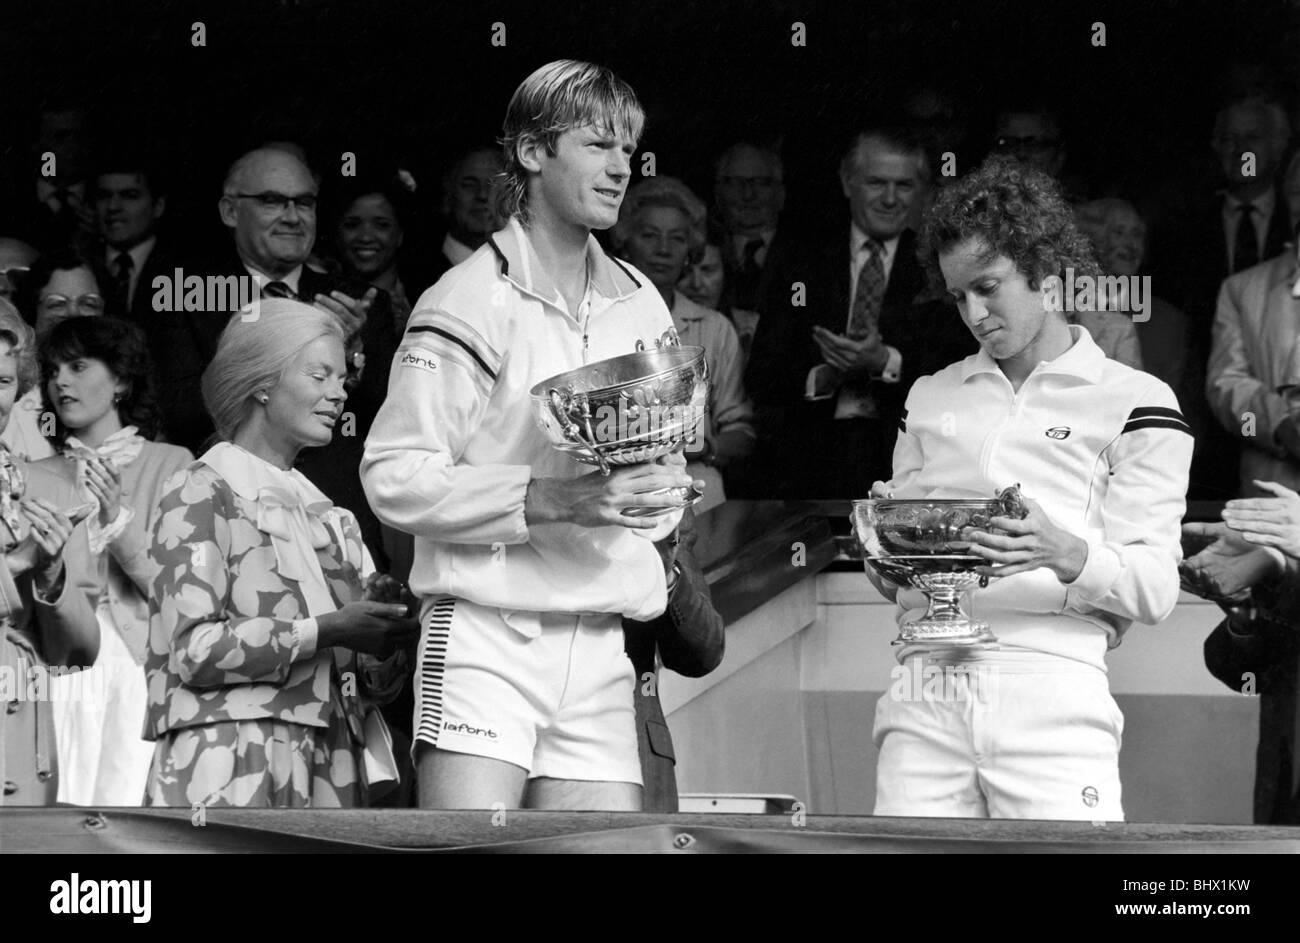 Tournoi de tennis de Wimbledon. 1981 Womens finales. Chris Evert Lloyd c. Hana Mandlikova. L'observation de la princesse Diana. Juillet 1981 81-3782-036 Banque D'Images